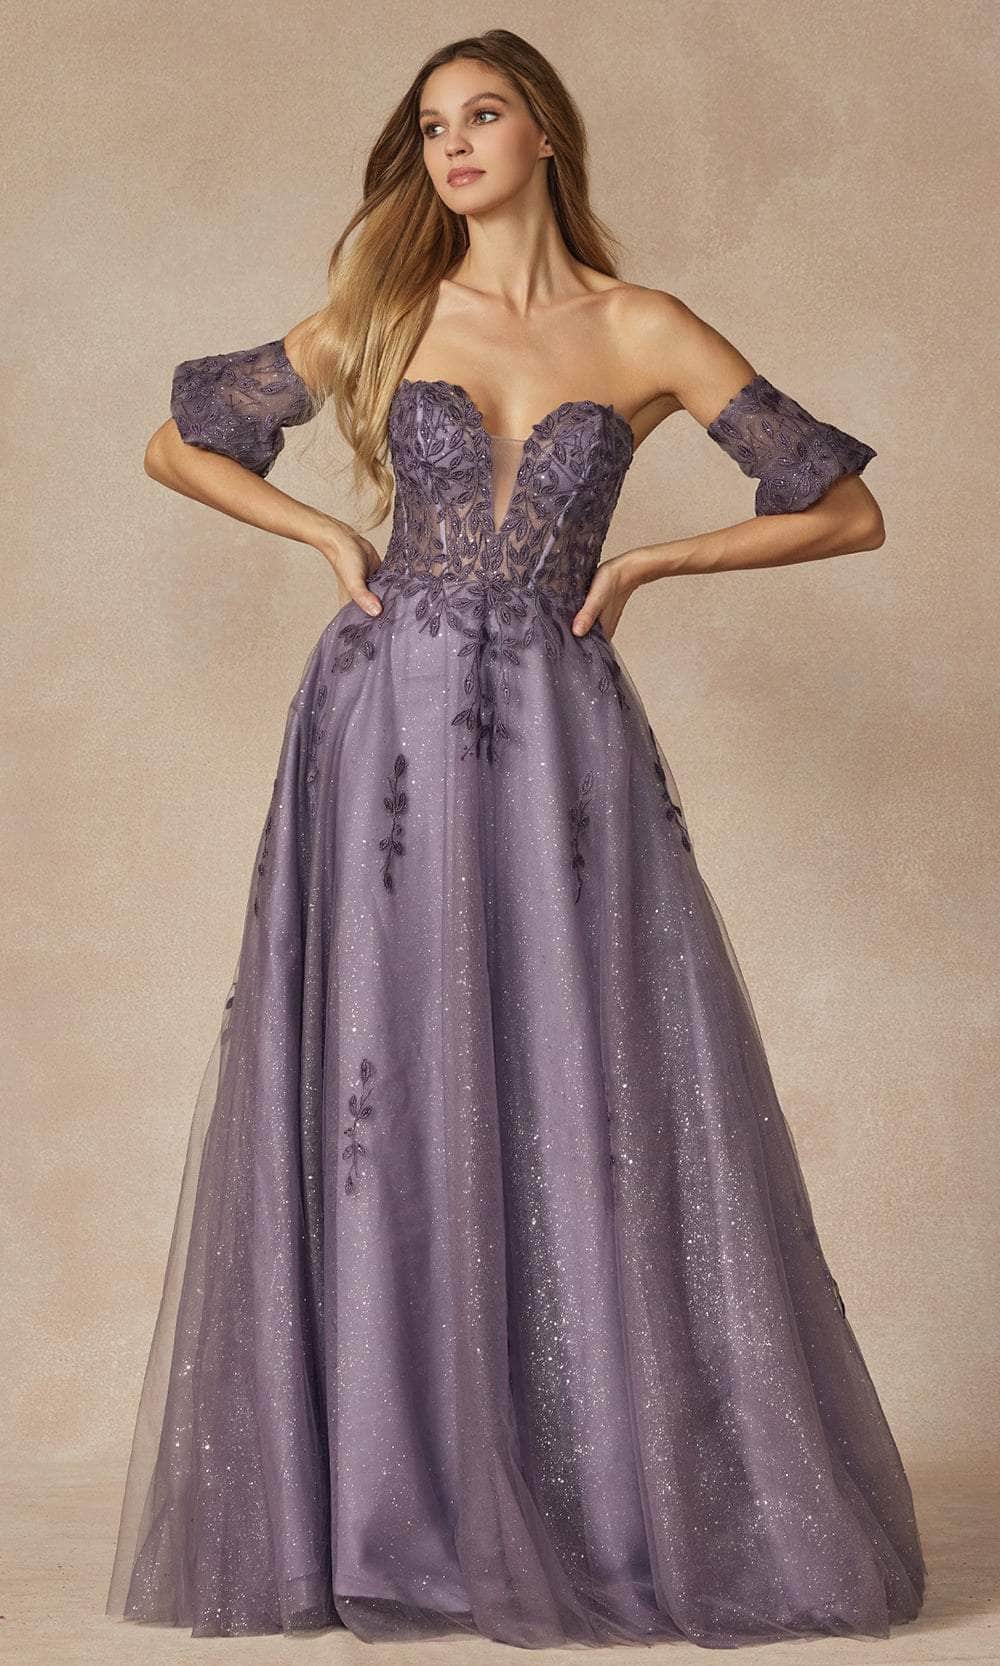 Image of Juliet Dresses 2409 - Plunging Leaf Embroidered Ballgown